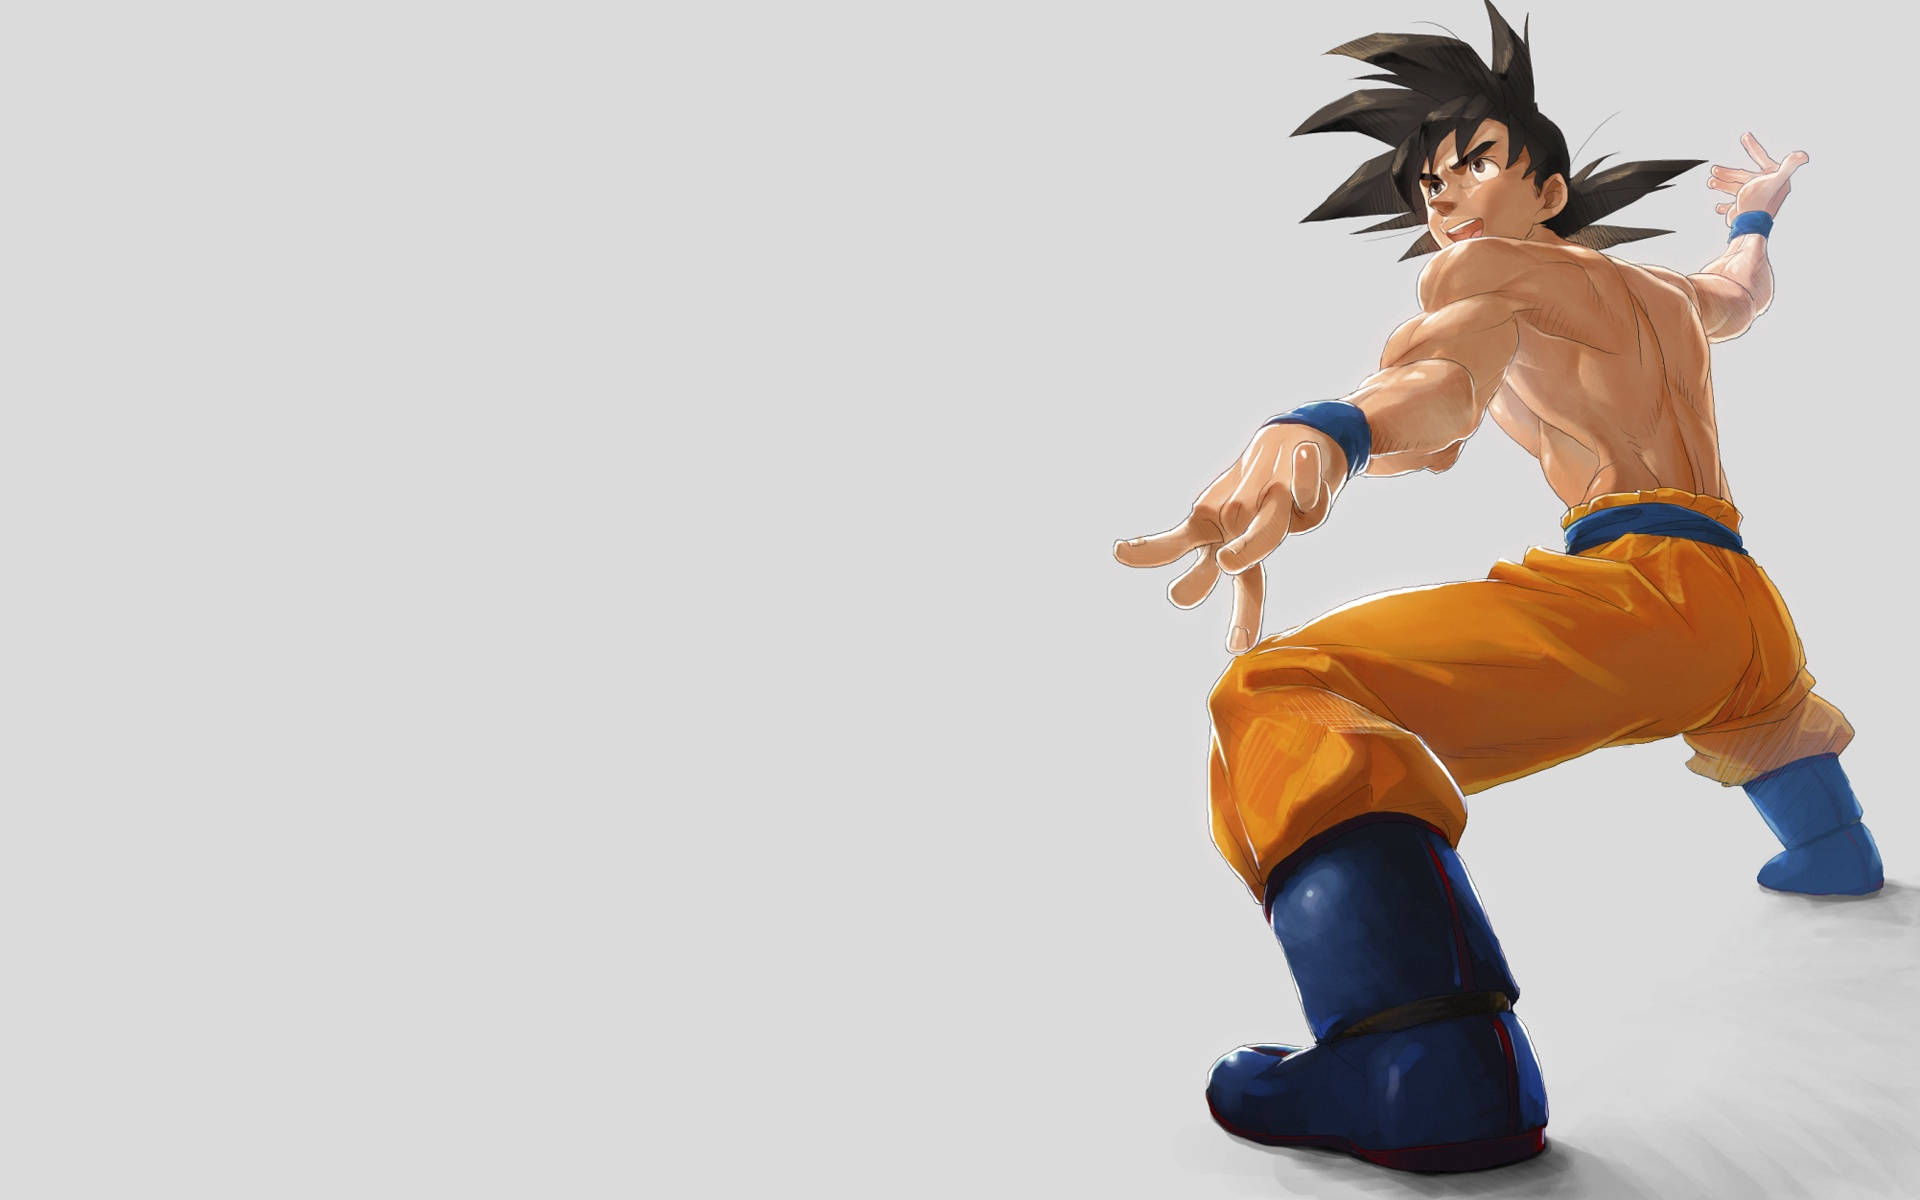 Awesome Goku Action Figure Wallpaper